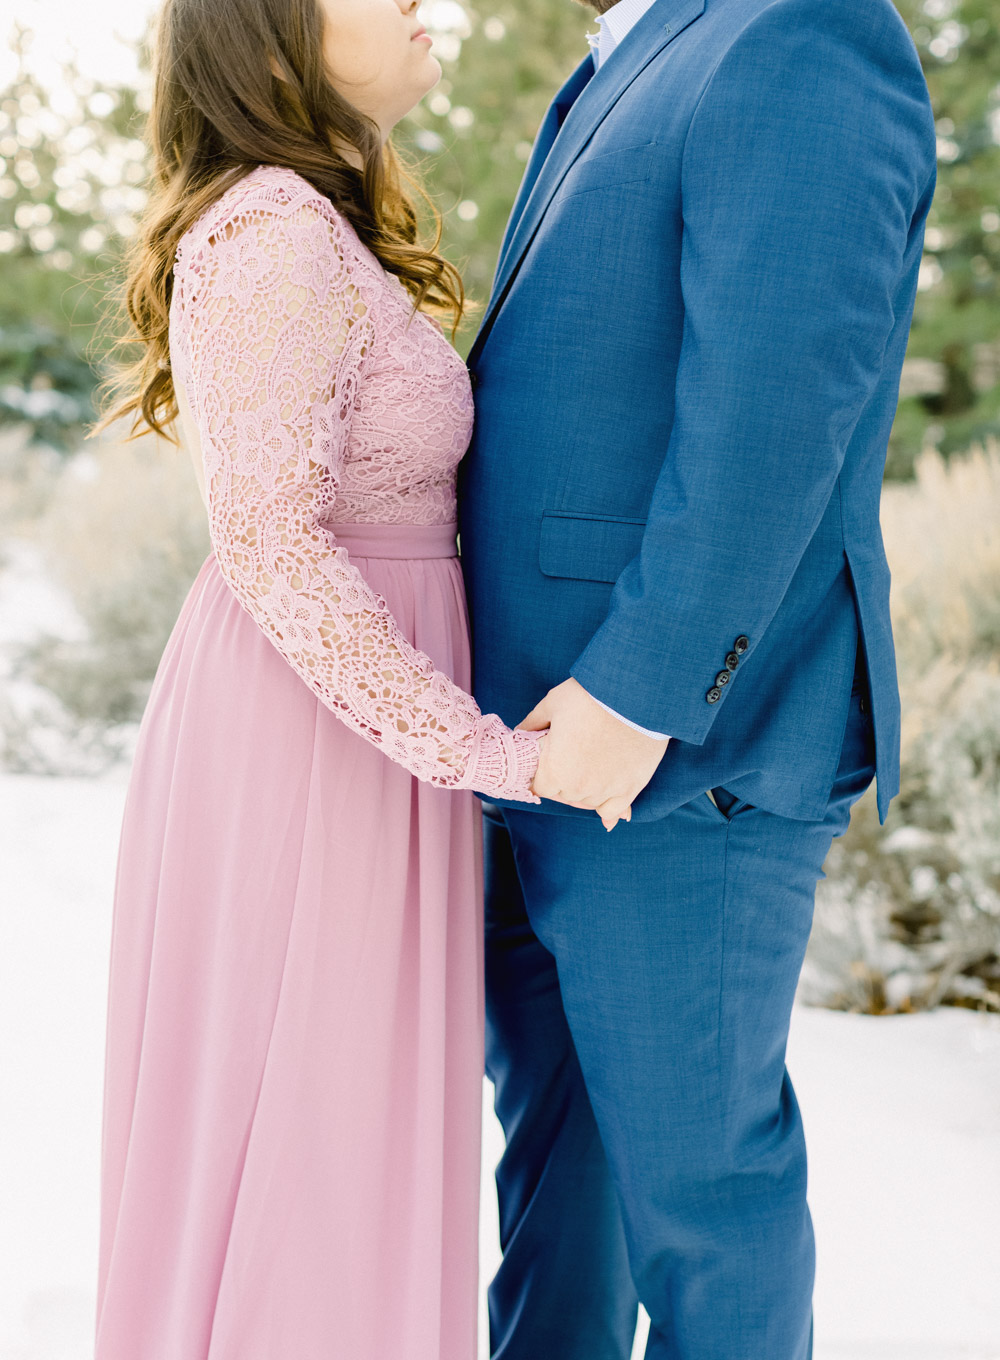 Wedding photographers in Reno, Reno engagement photos in winter